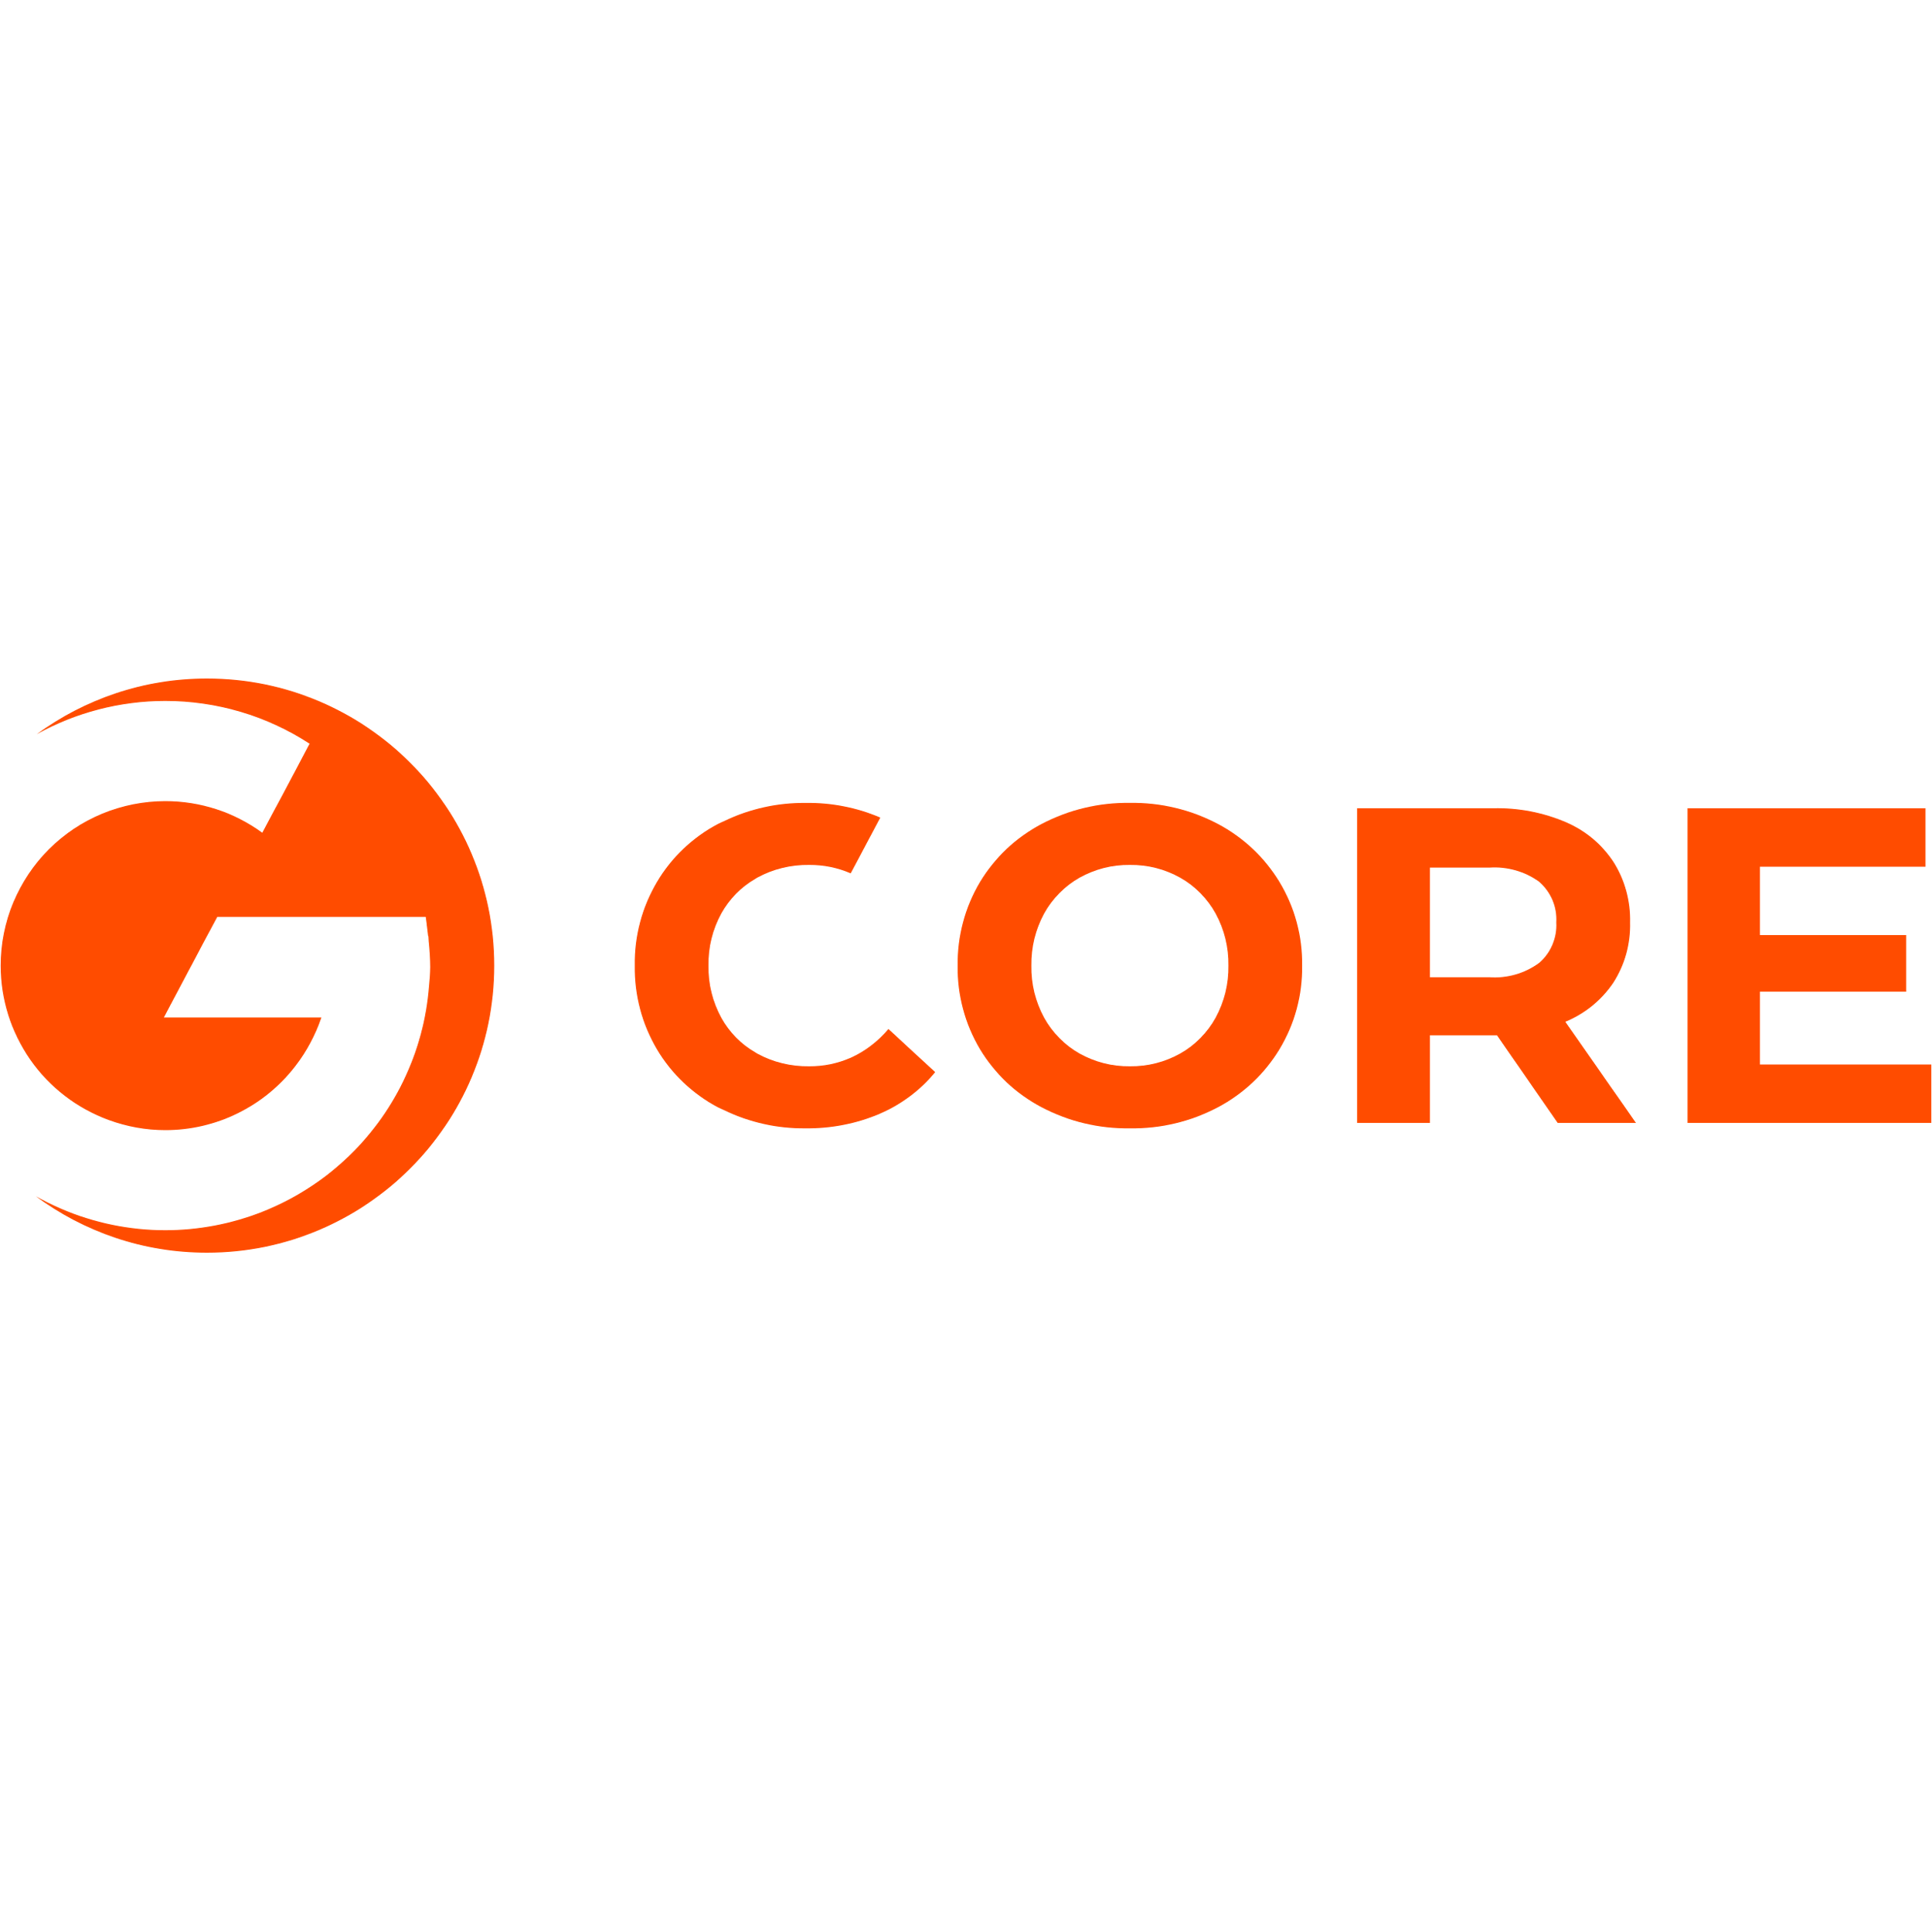 Gcore Logo  Transparent Image